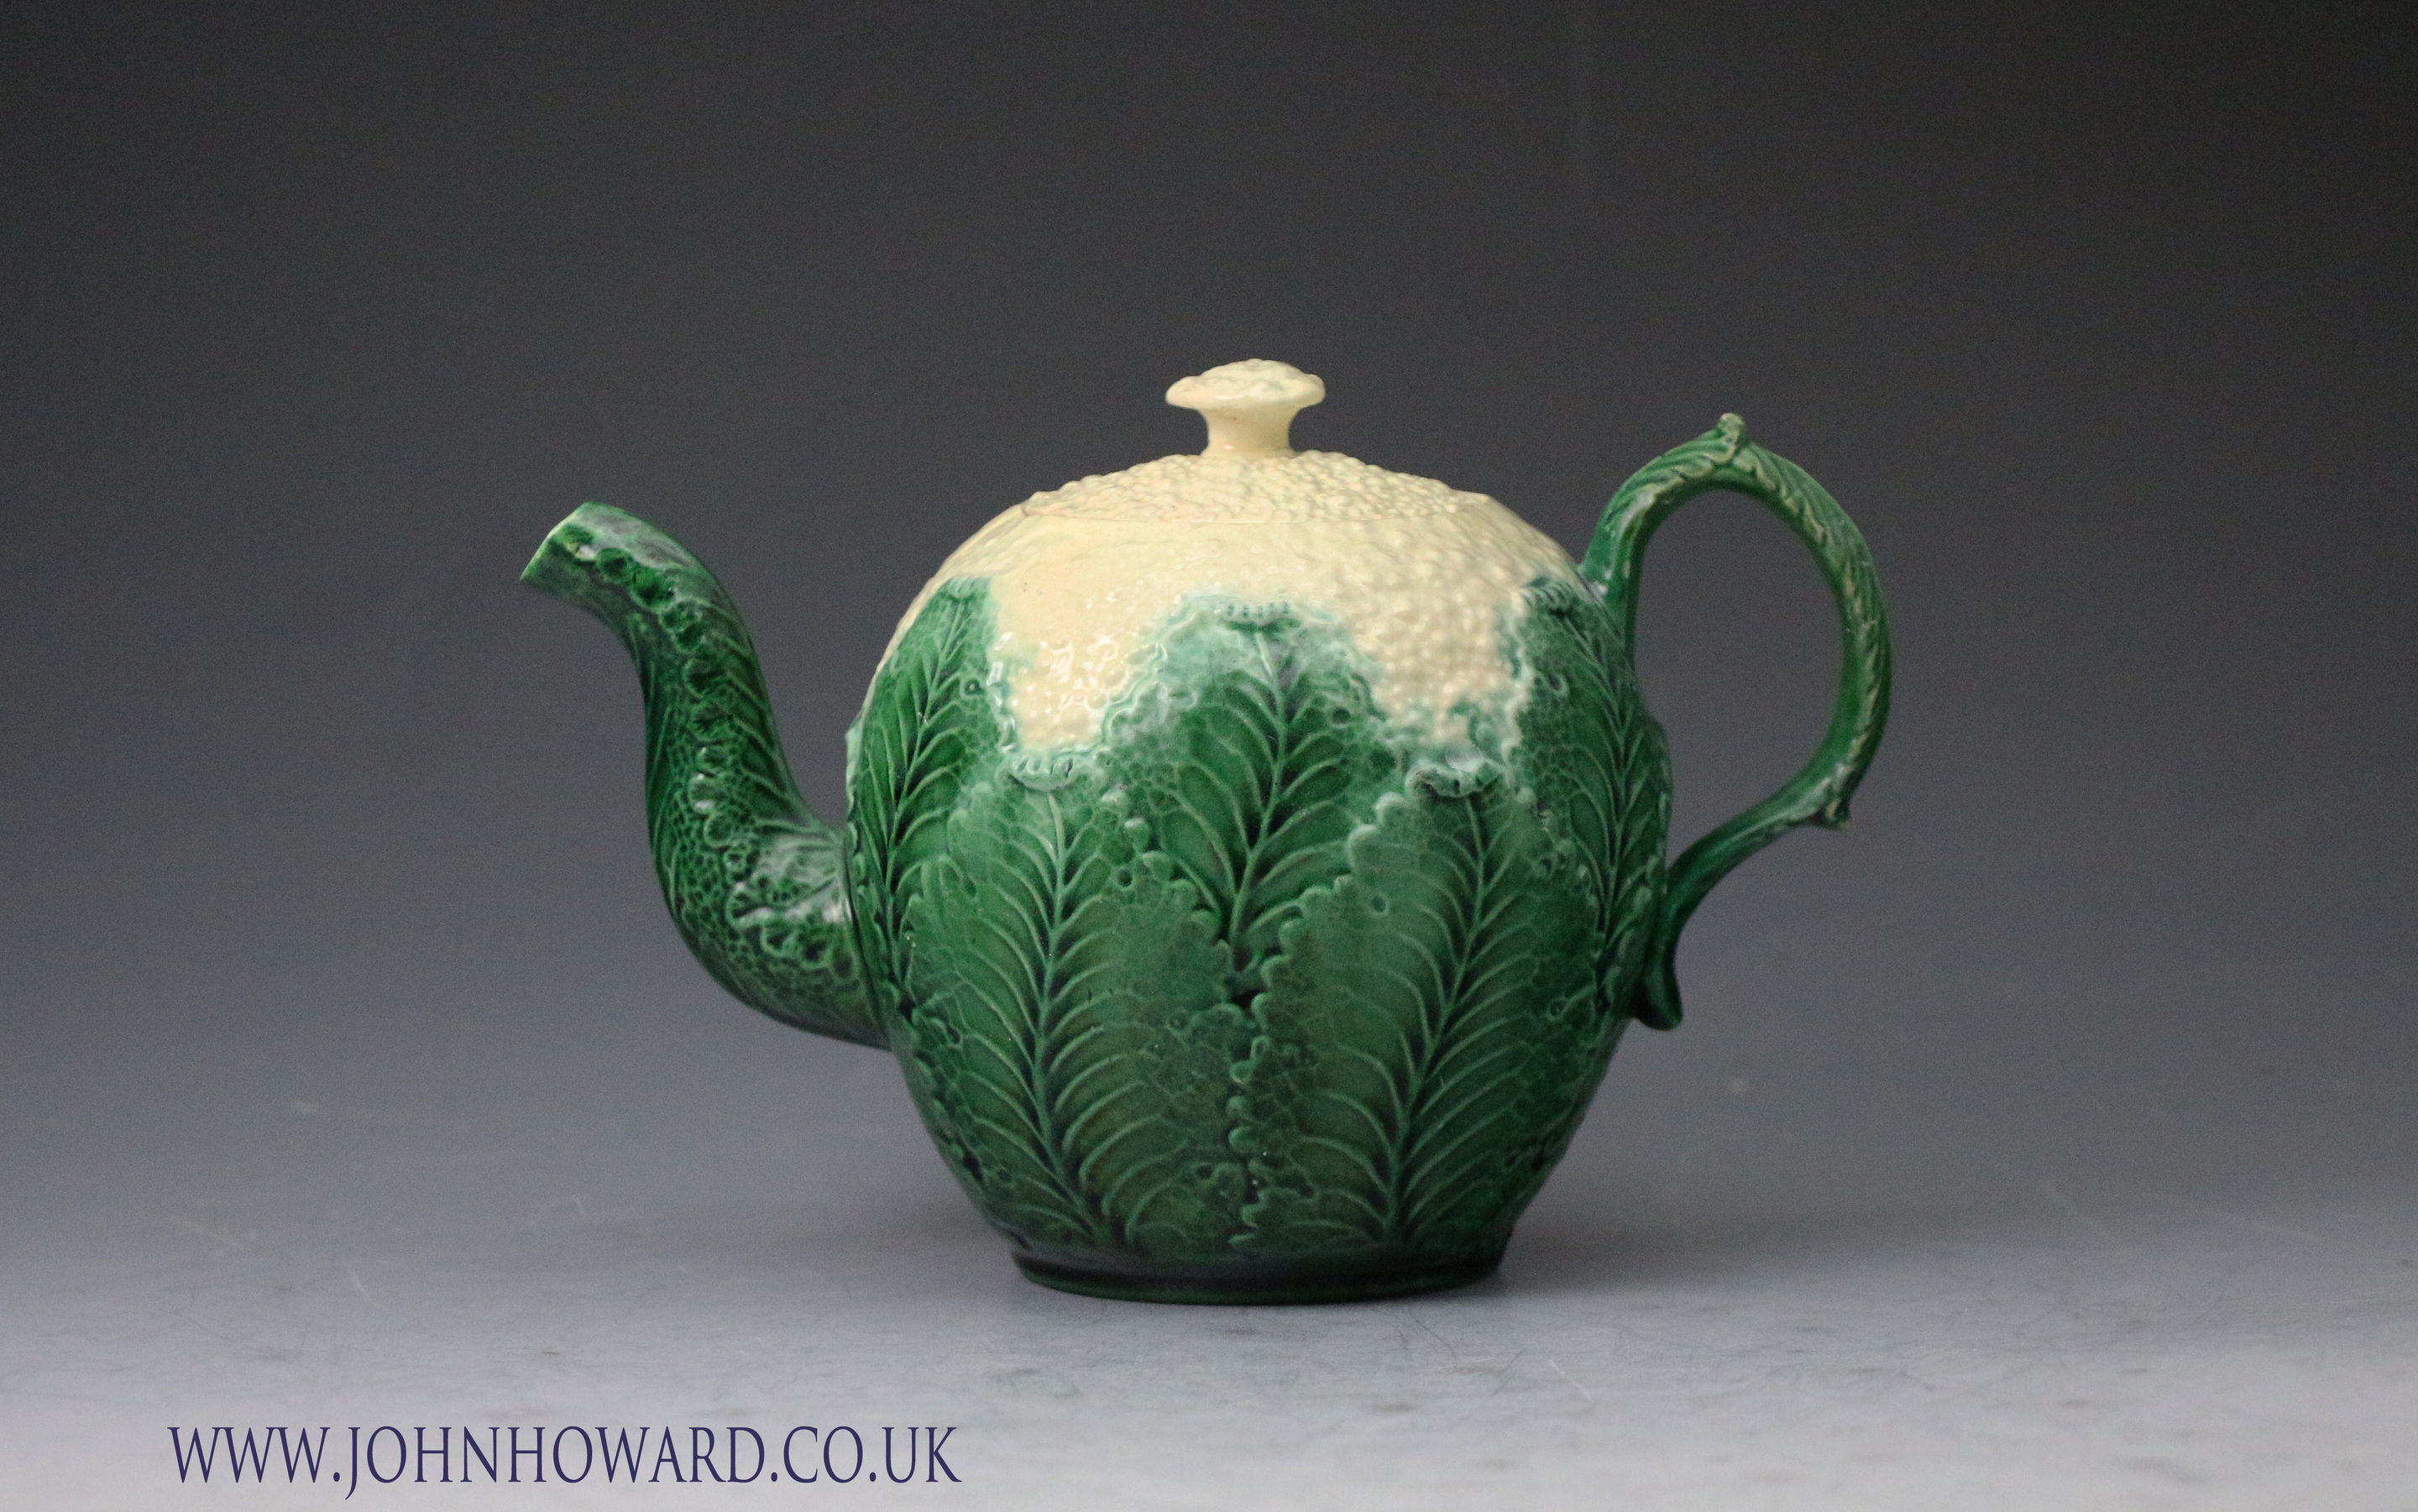 Staffordshire creamware pottery cauliflower teapot  period c1760 English.